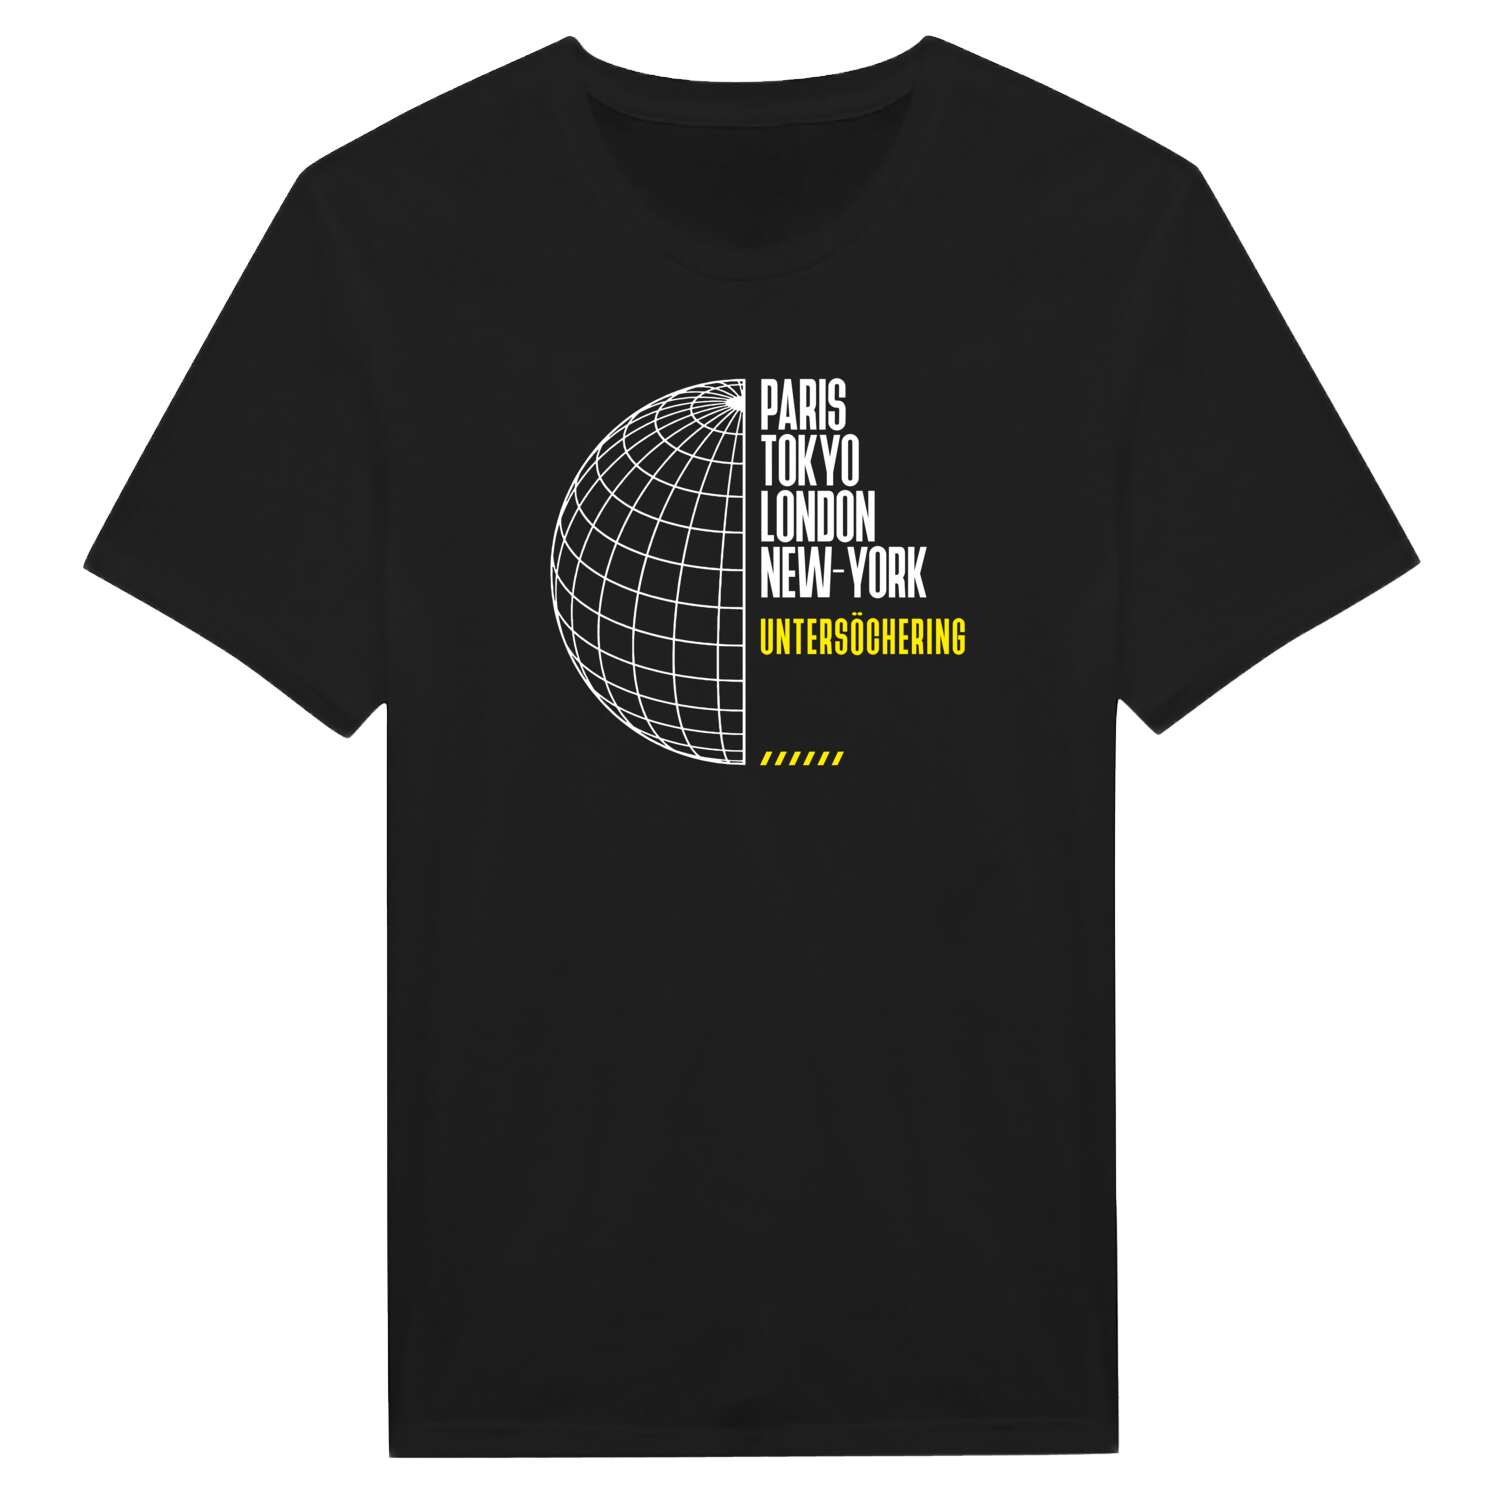 Untersöchering T-Shirt »Paris Tokyo London«